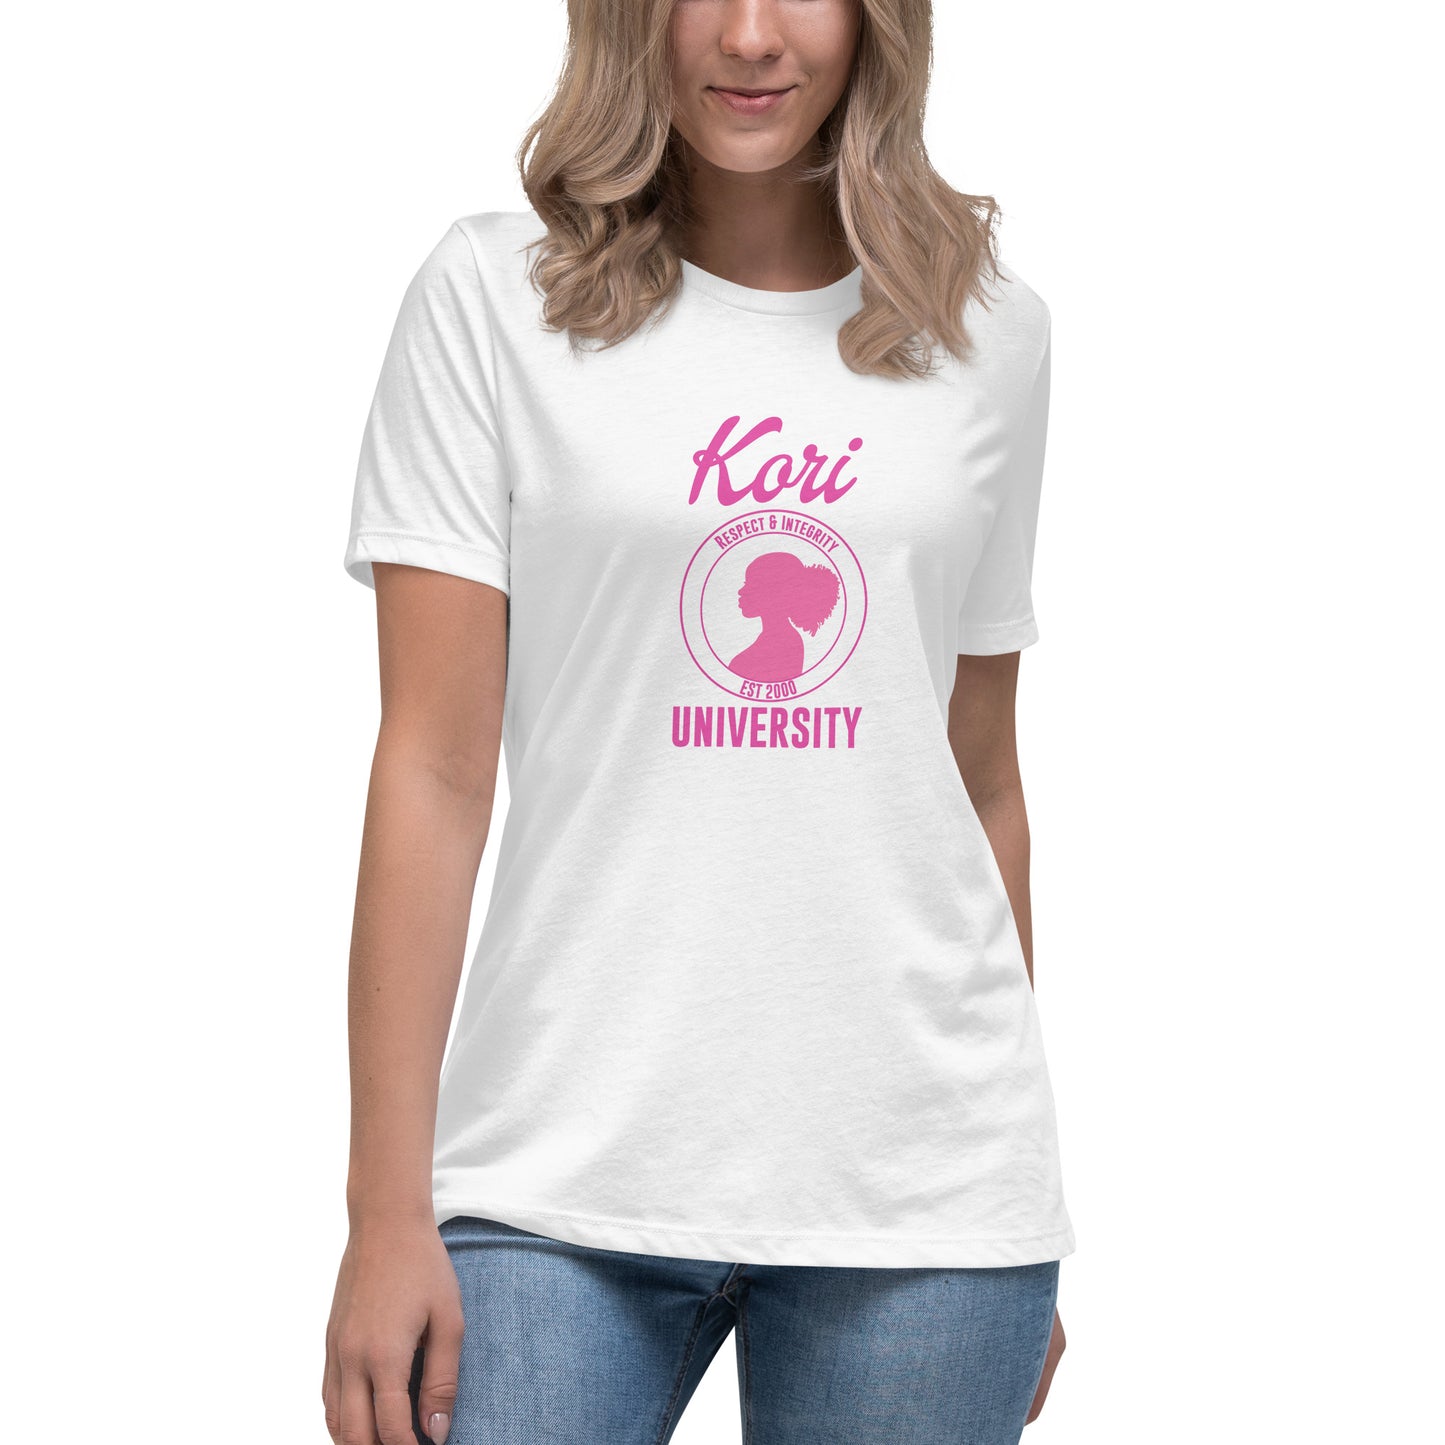 KORI UNIVERSITY - Women's Relaxed T-Shirt